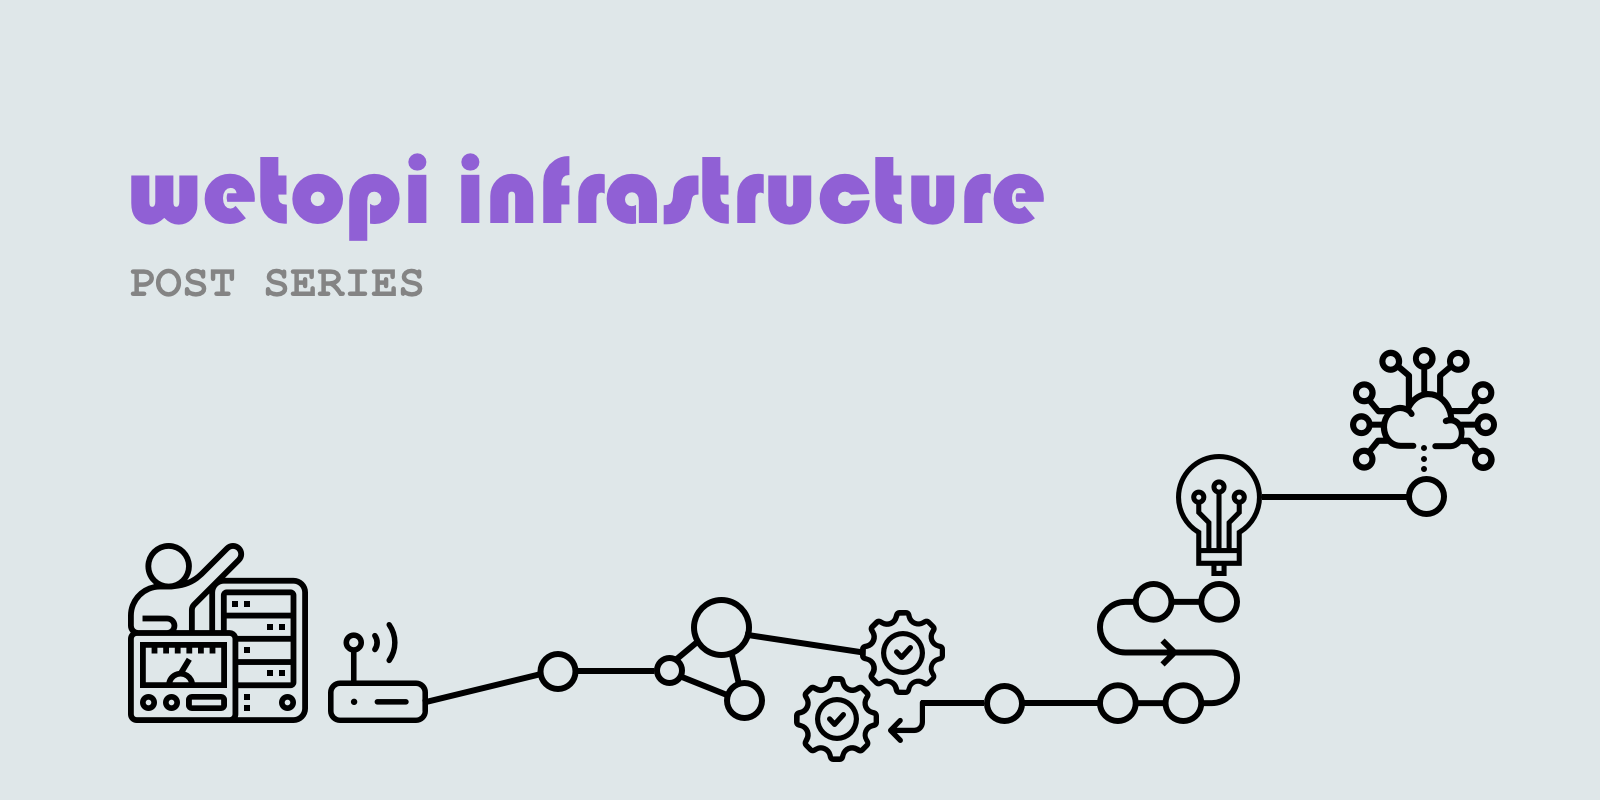 infraestructura de hosting wetopi